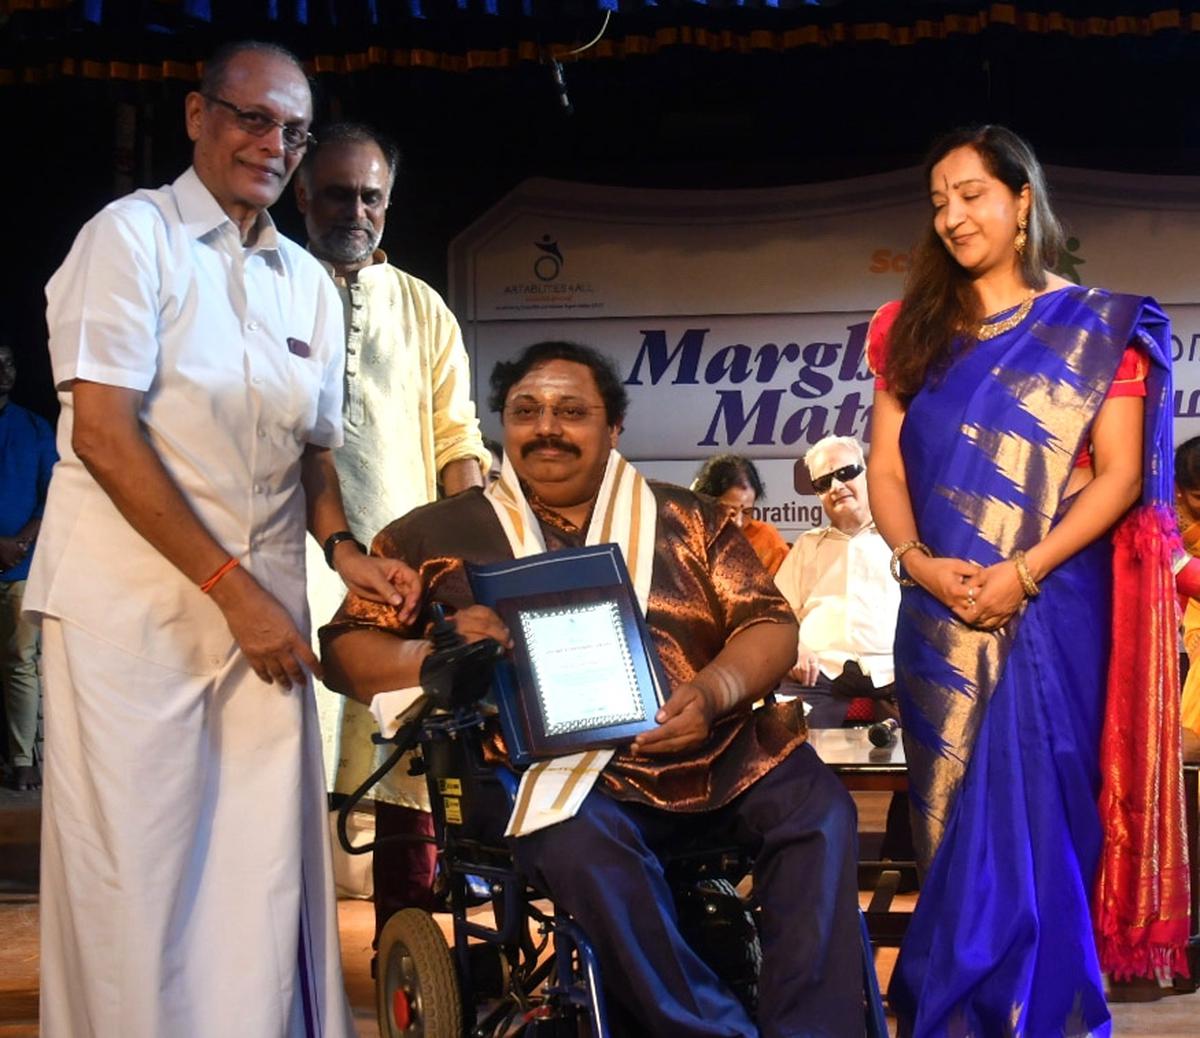 Cleveland Sundaram presents the Lifetime Achievement Award to mridangam exponent Erode Nagaraj at the Marghazhi Matram program in Chennai on Friday. 